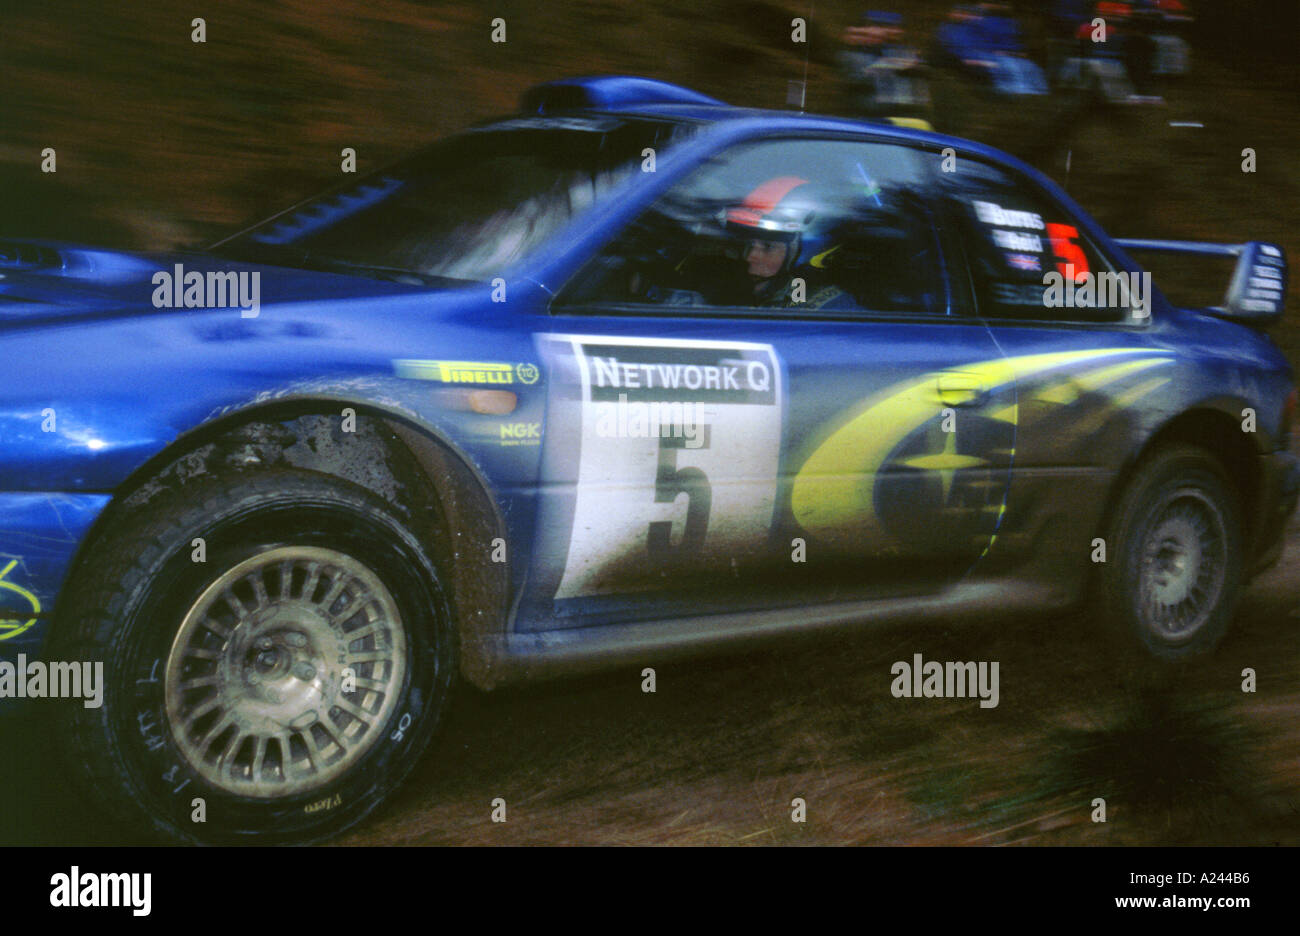 1999 Subaru Impreza WRC Q rete ustioni Foto Stock